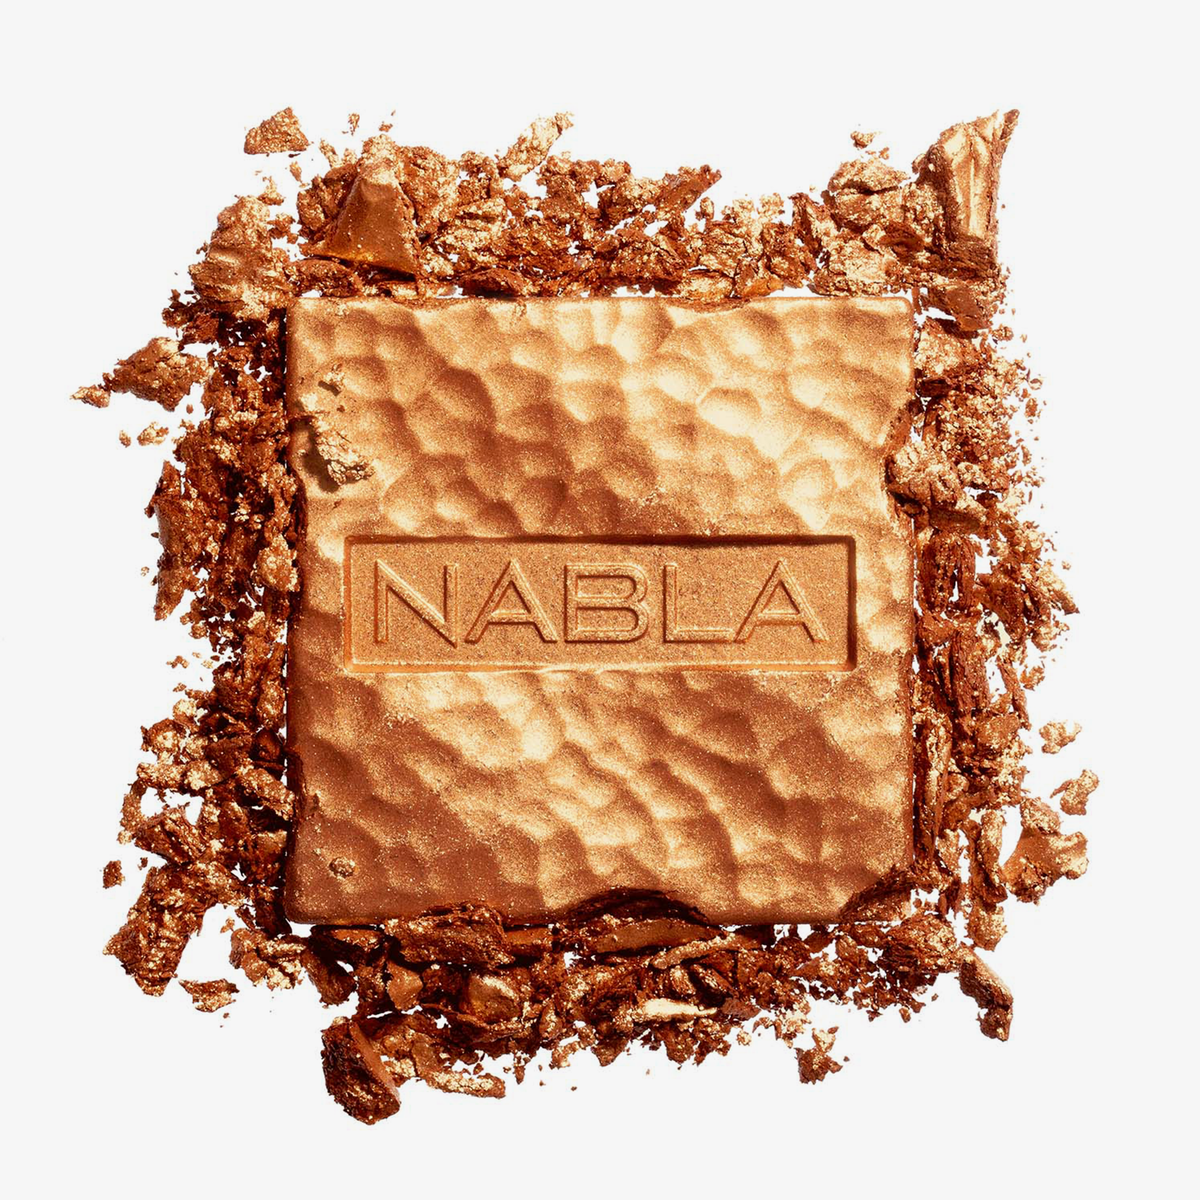 Nabla Cosmetics - Lucent Jungle Skin Glazing Highlighter & Luminizer